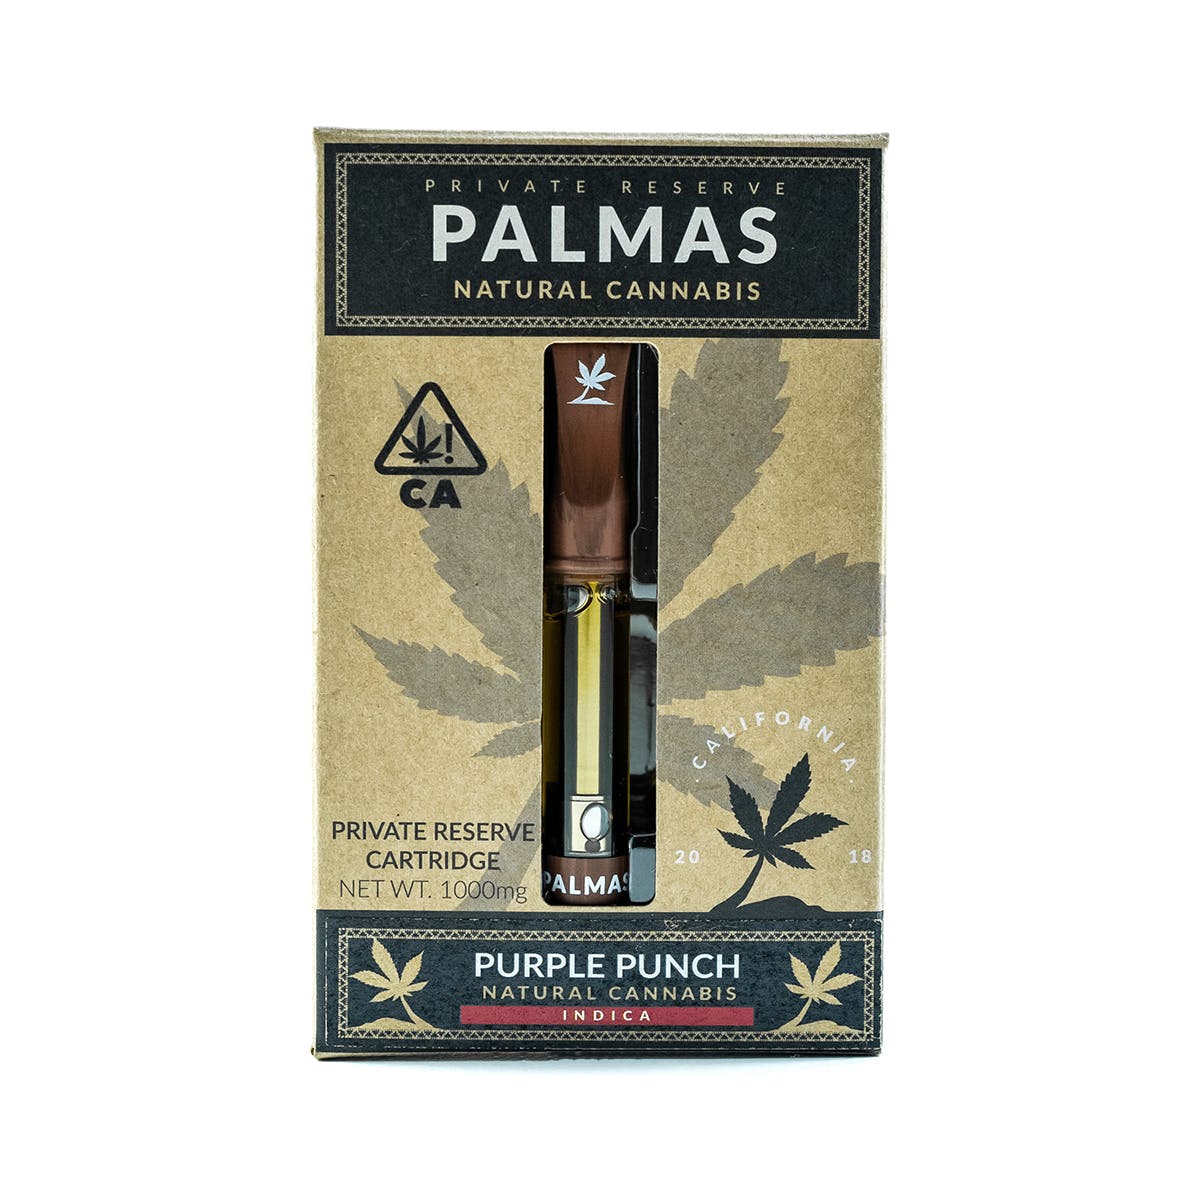 concentrate-palmas-cannabis-palmas-private-reserve-cartridge-purple-punch